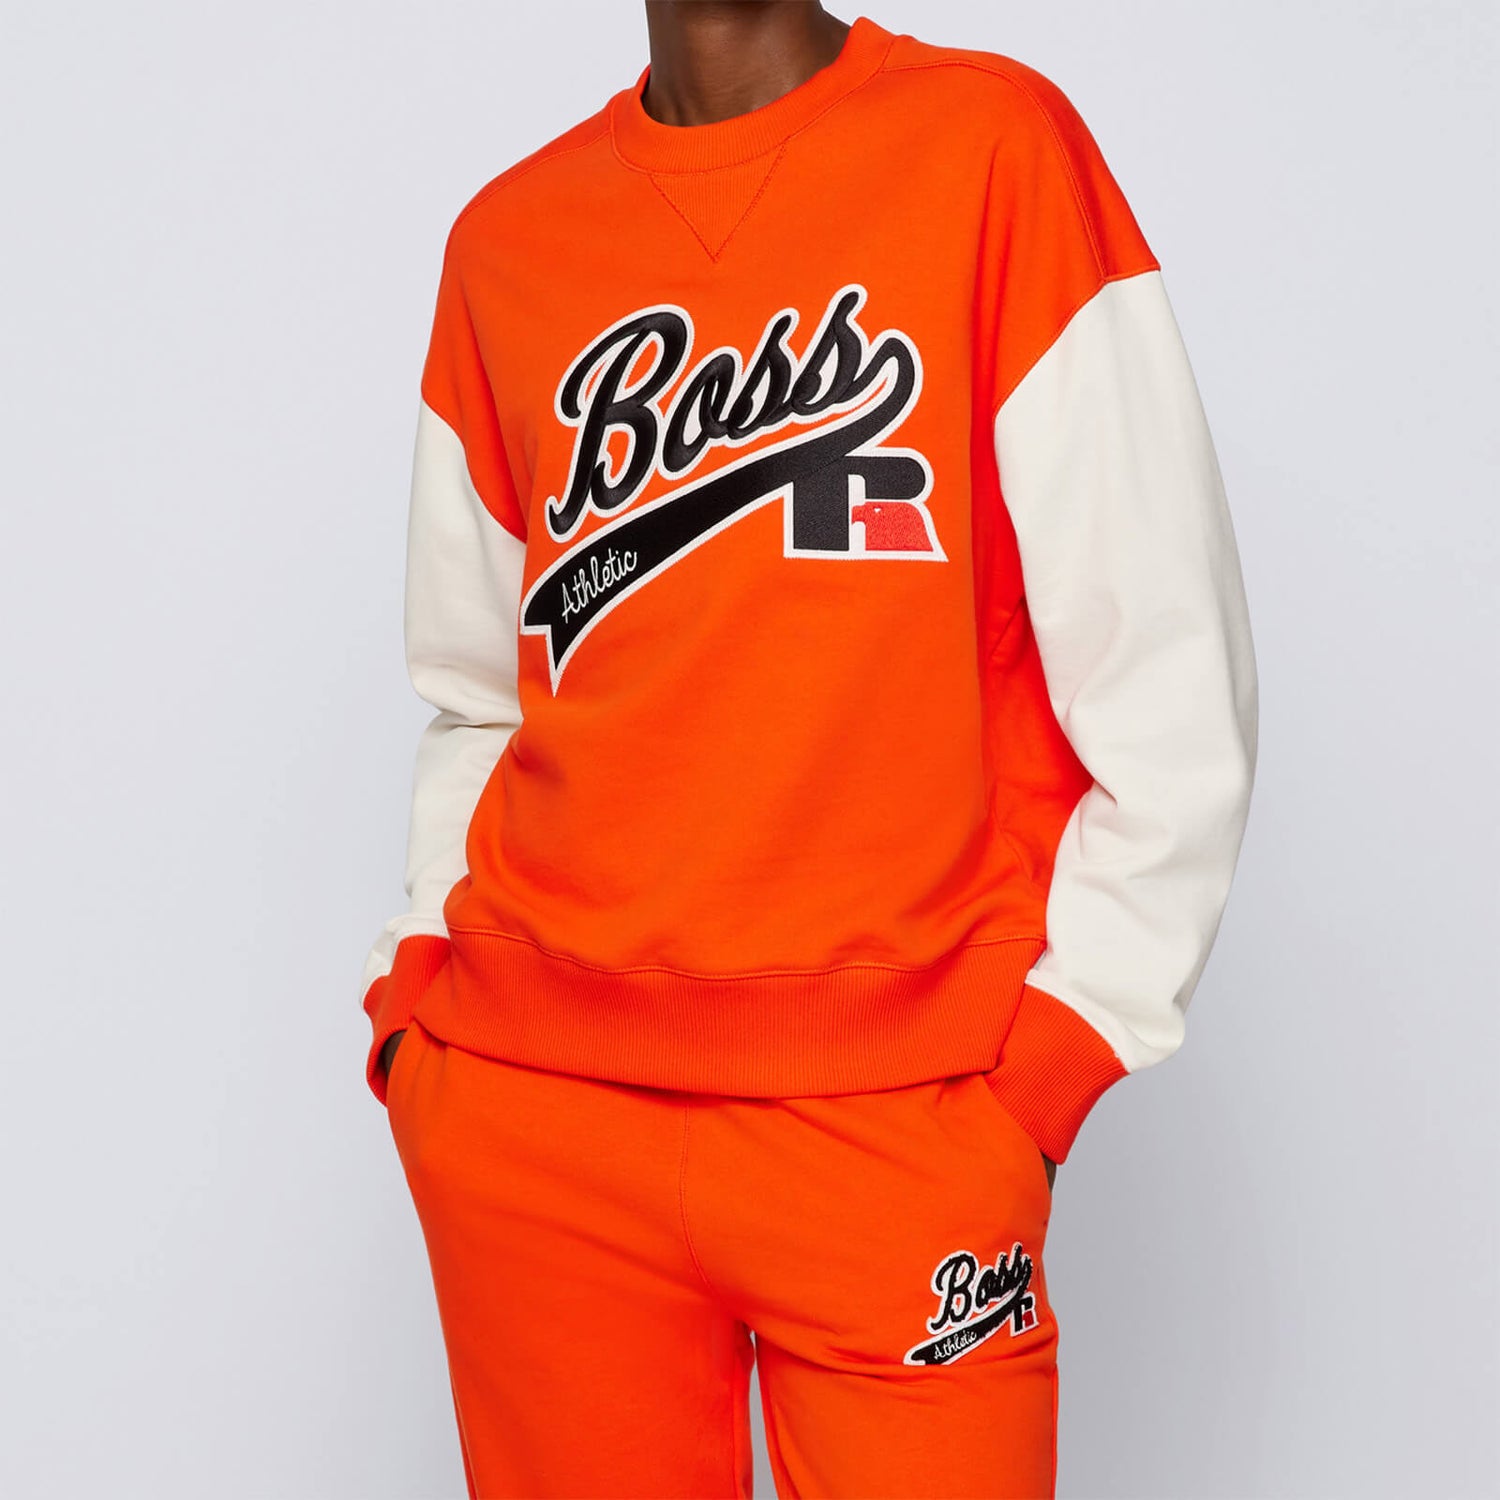 BOSS X Russell Athletic Women's Eraisa Sweatshirt - Bright Orange